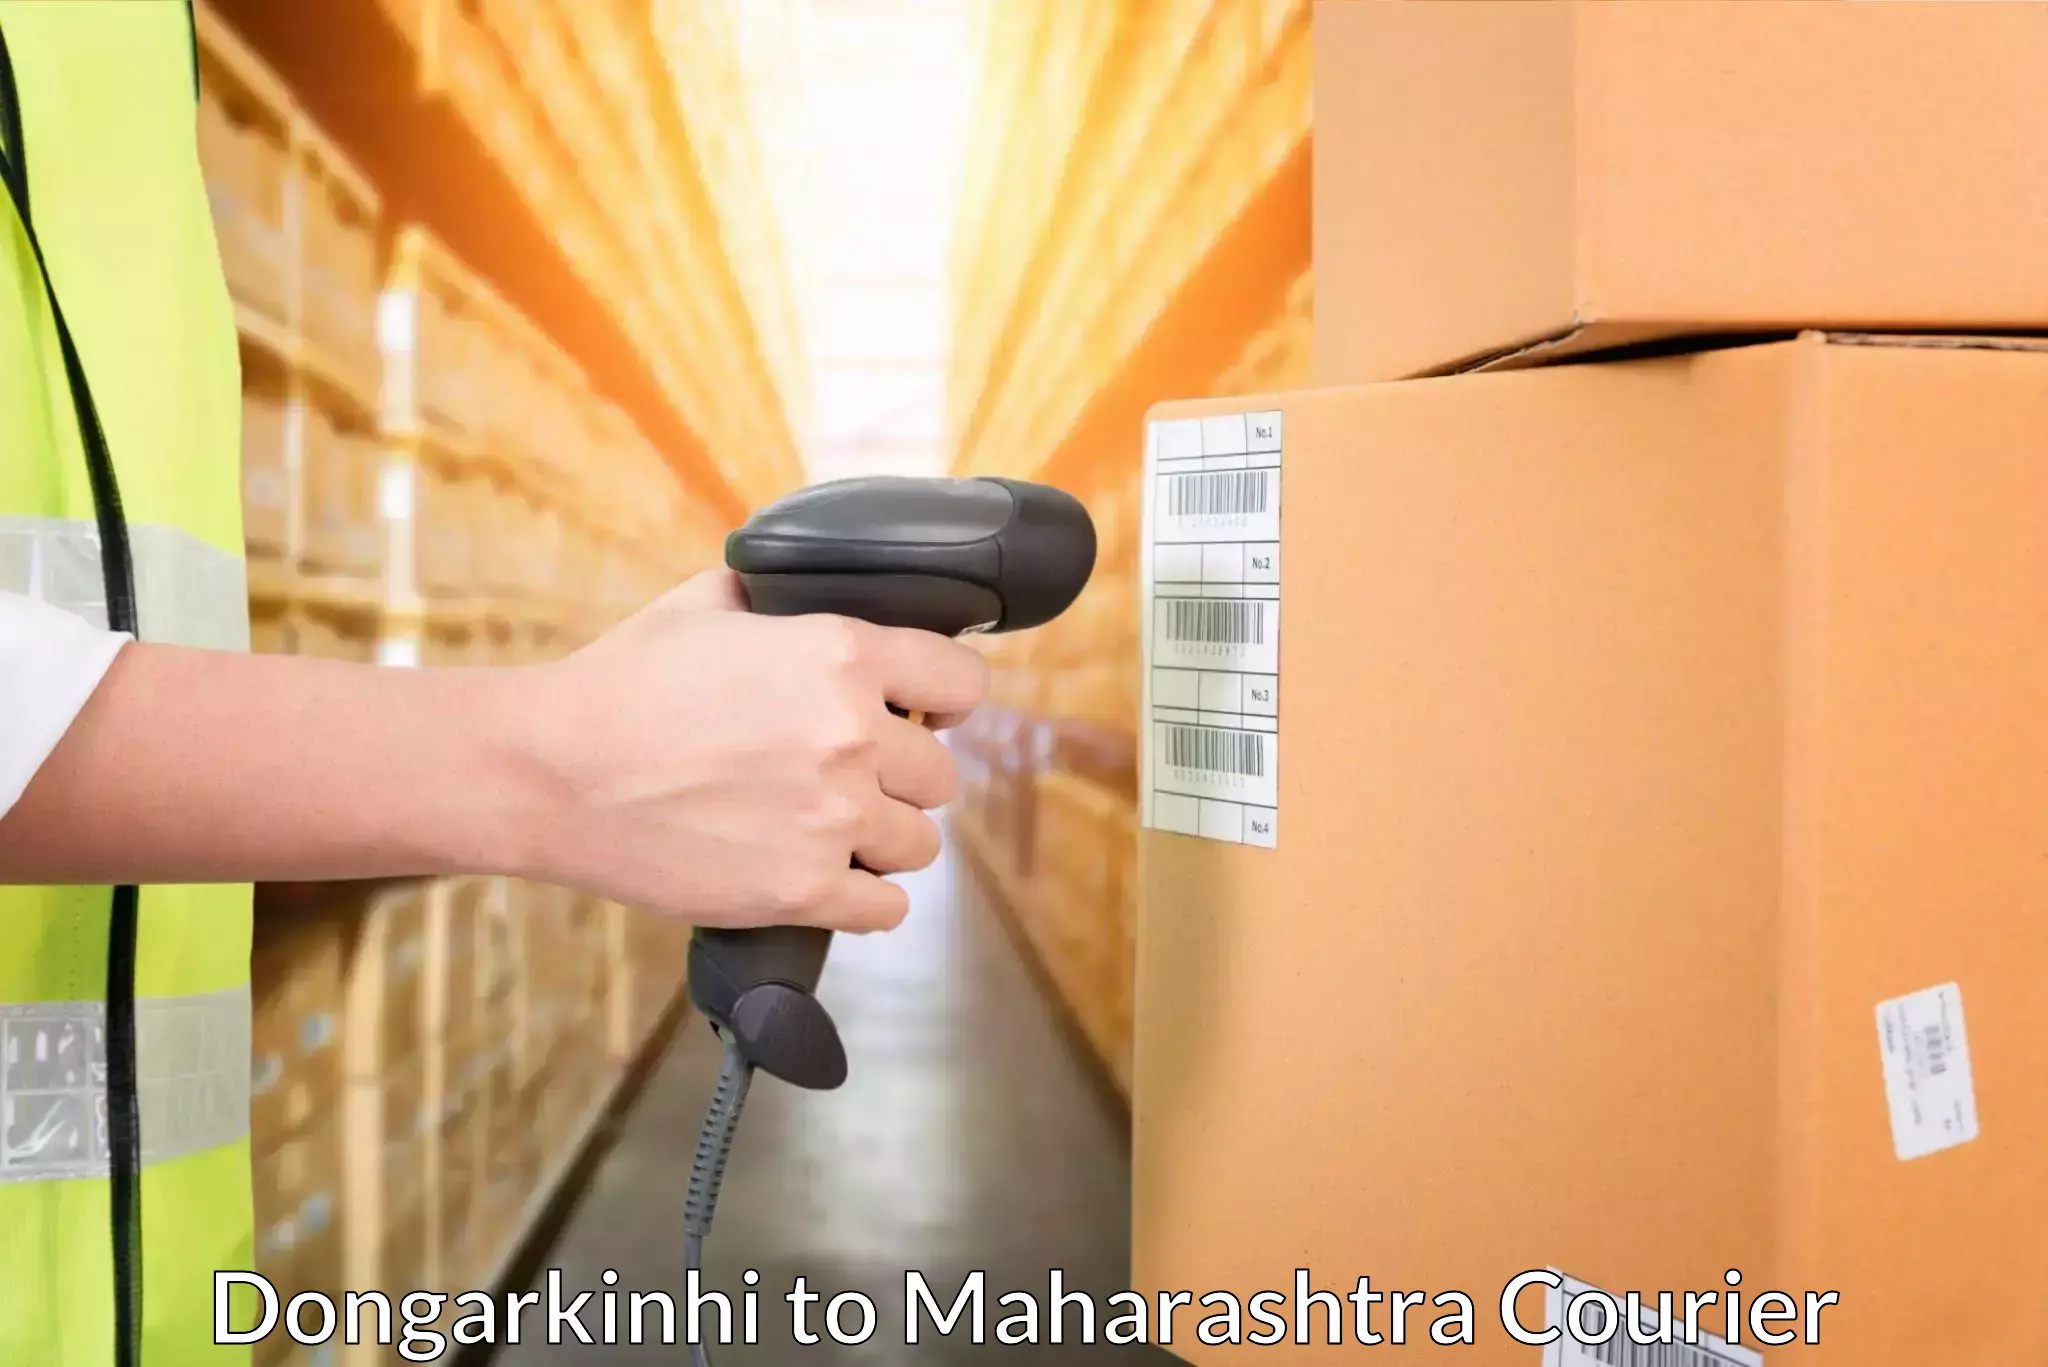 Retail shipping solutions Dongarkinhi to Tata Institute of Social Sciences Mumbai